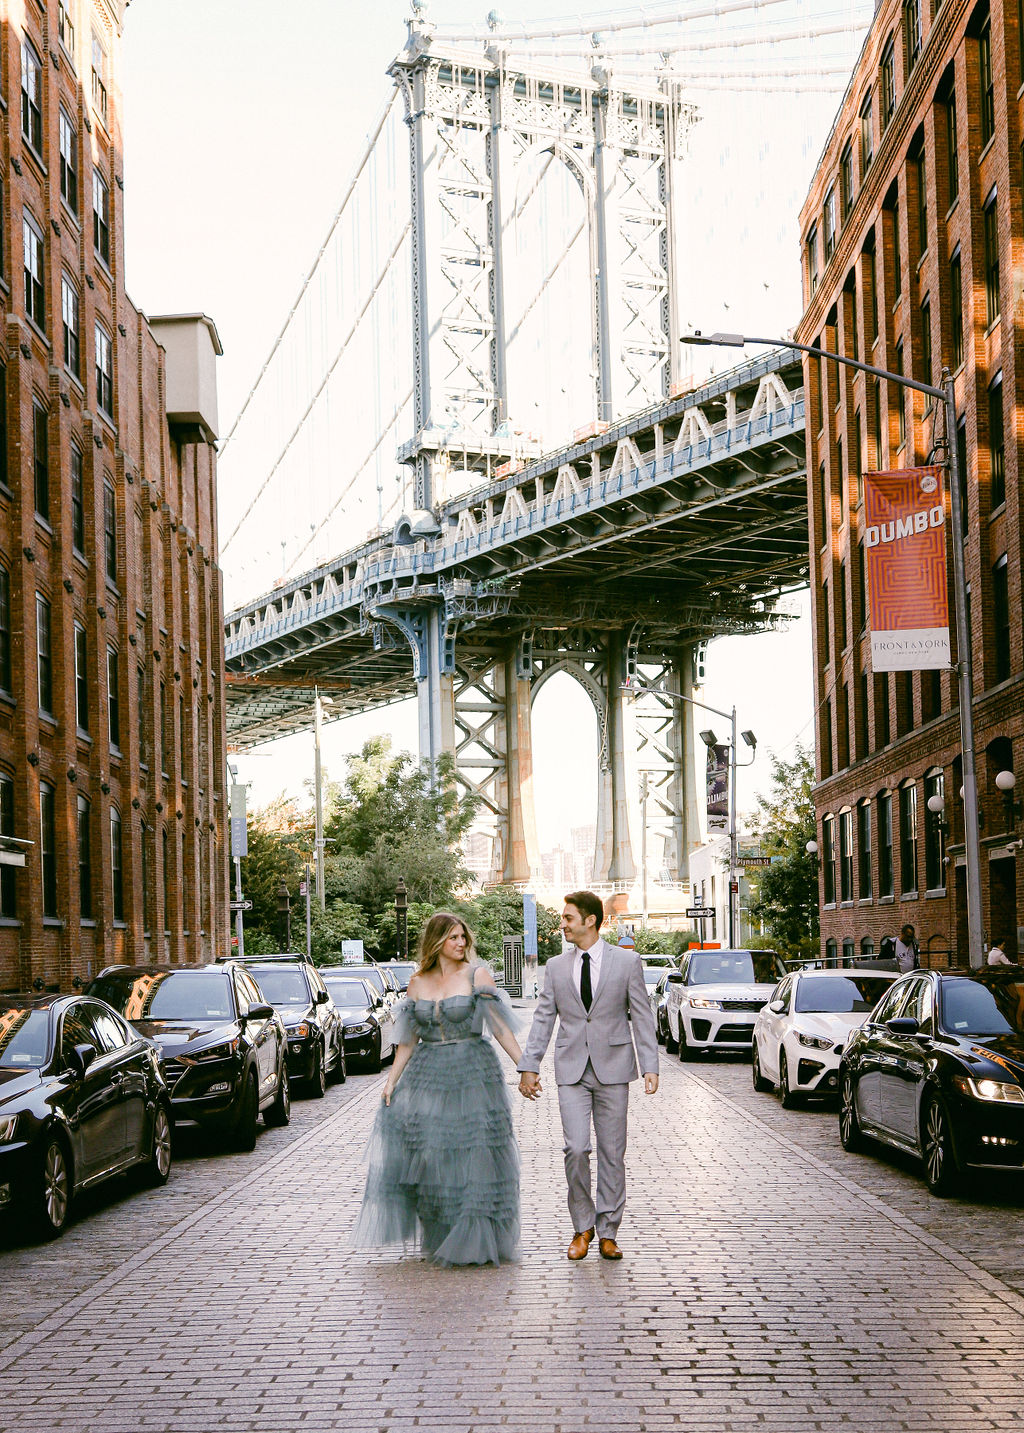 DUMBO bridge manhattan dan humphrey gossip girl engagement photoshoot teal tulle vintage ruffle dress branding photographer Chelsea Loren